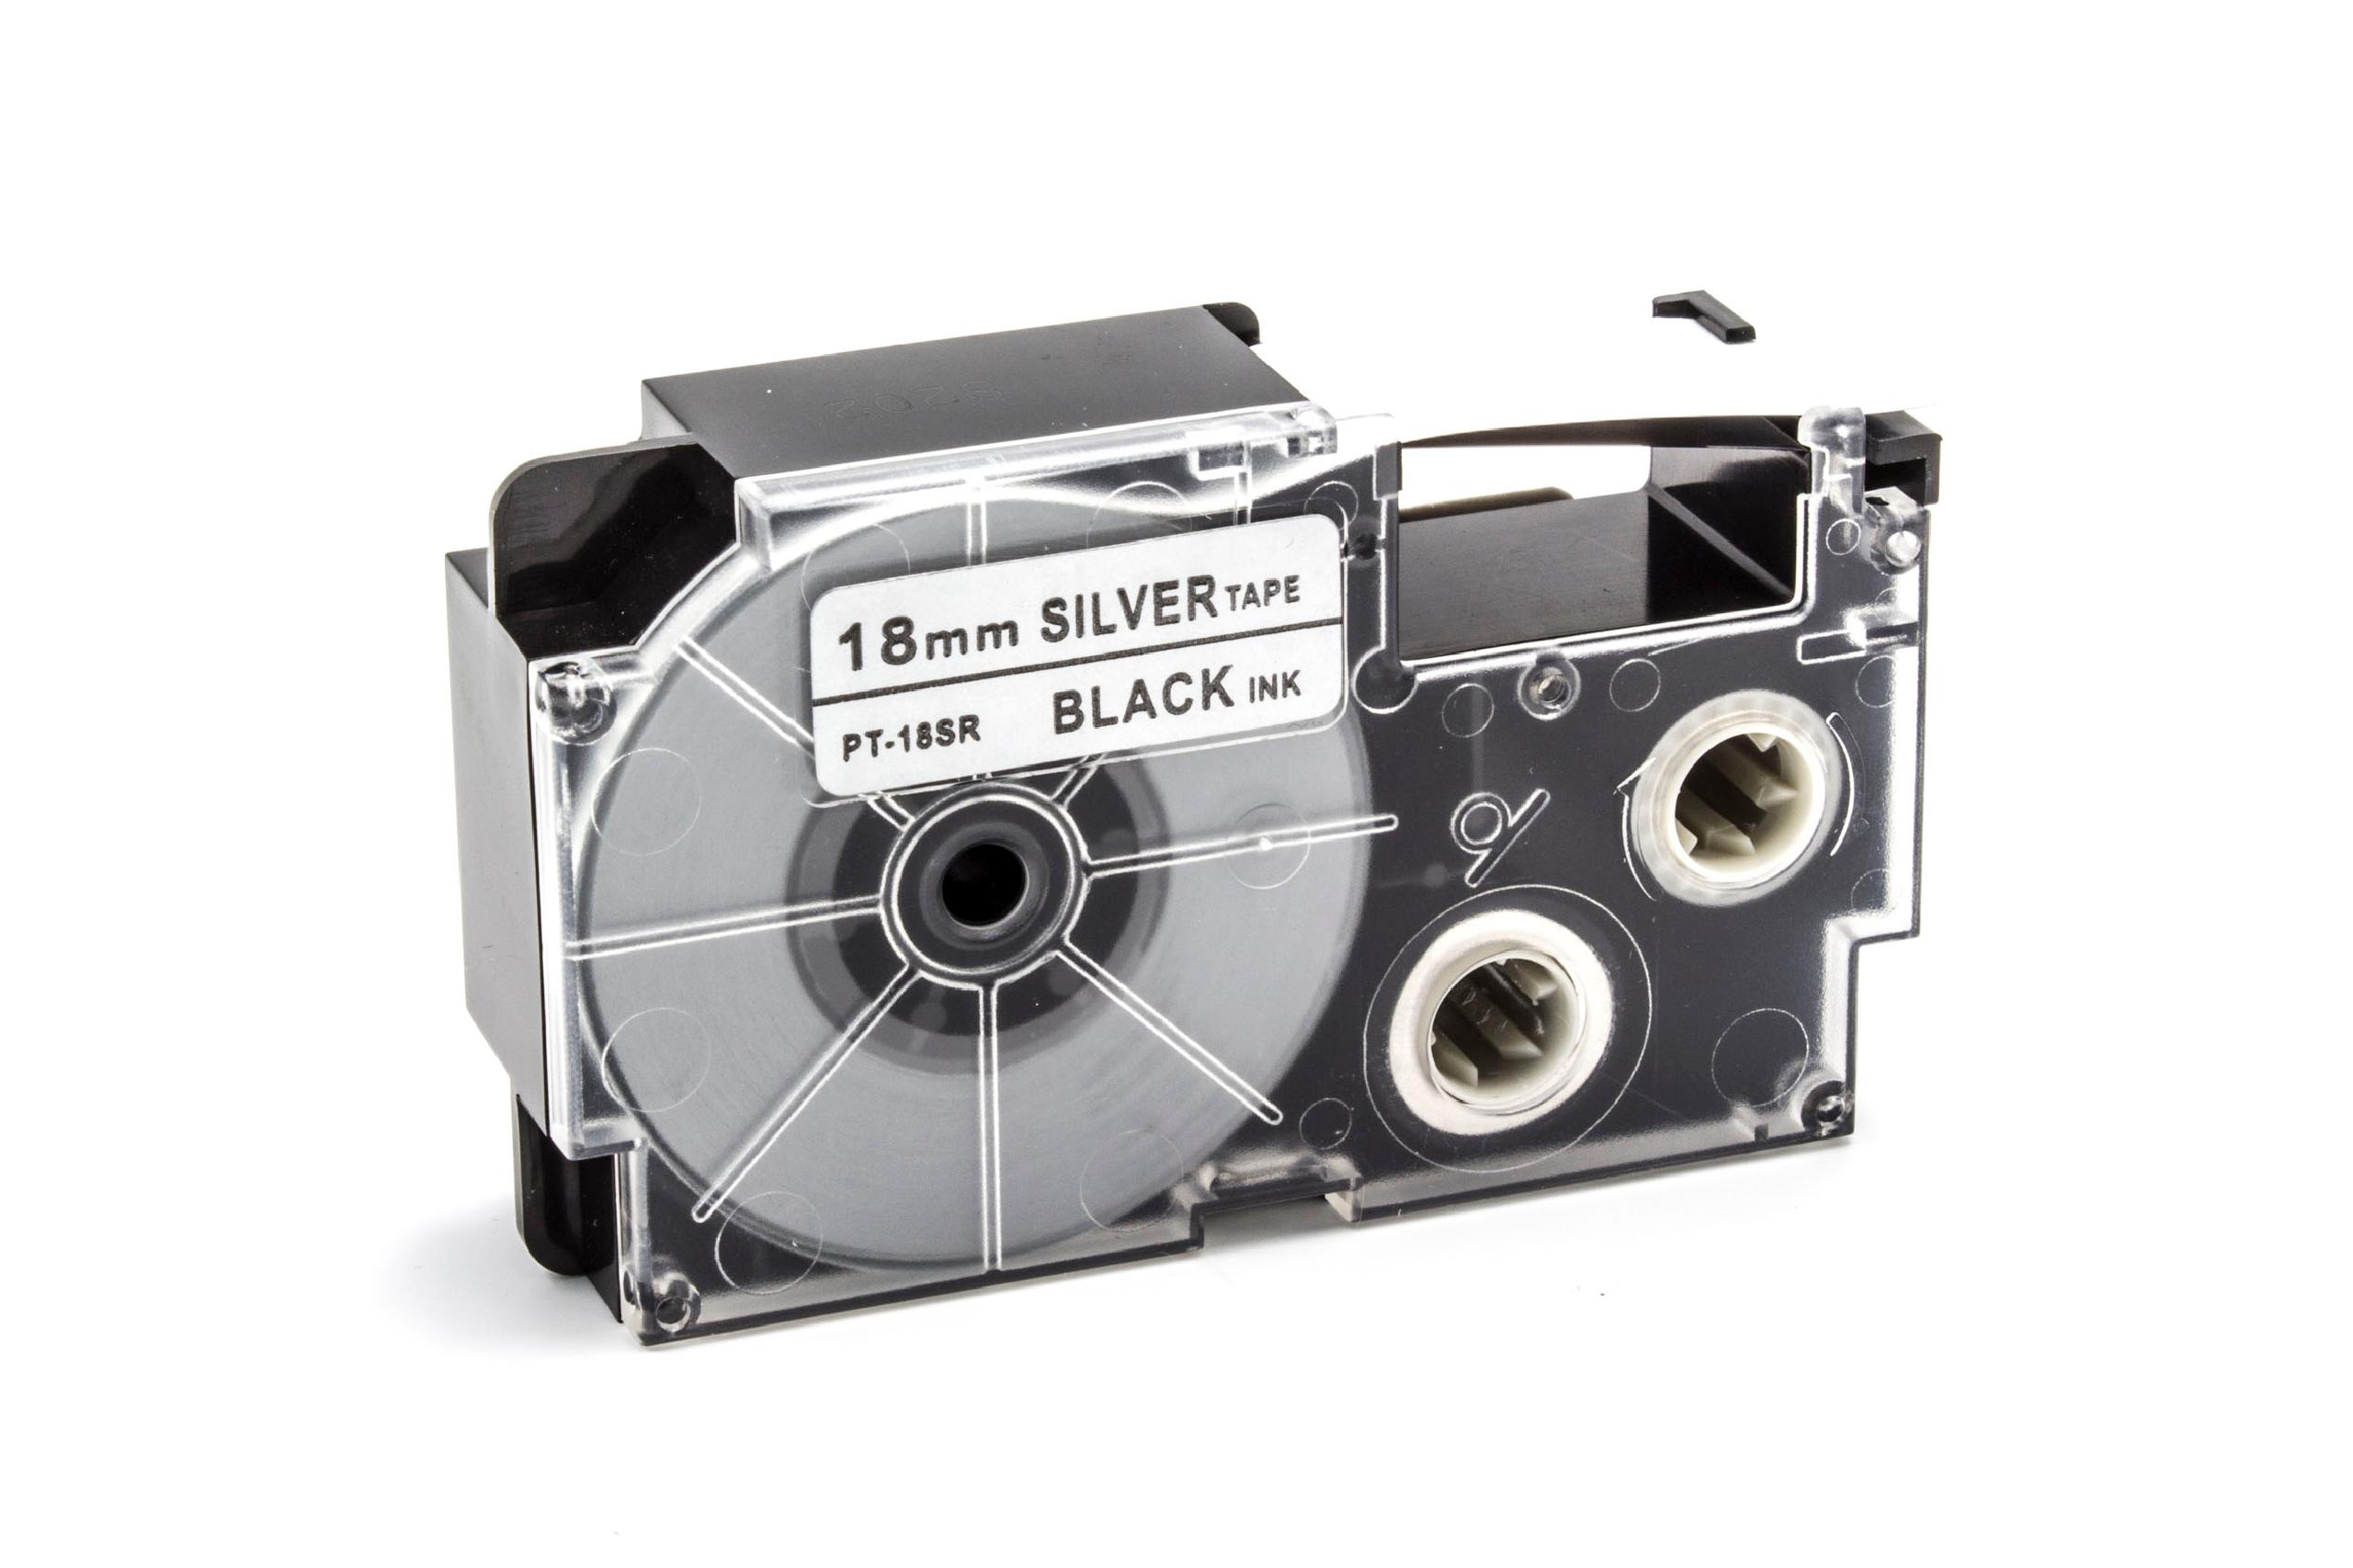 Cassetta nastro sostituisce Casio XR-18SR per etichettatrice Casio 18mm nero su argentato, pet+ RESIN